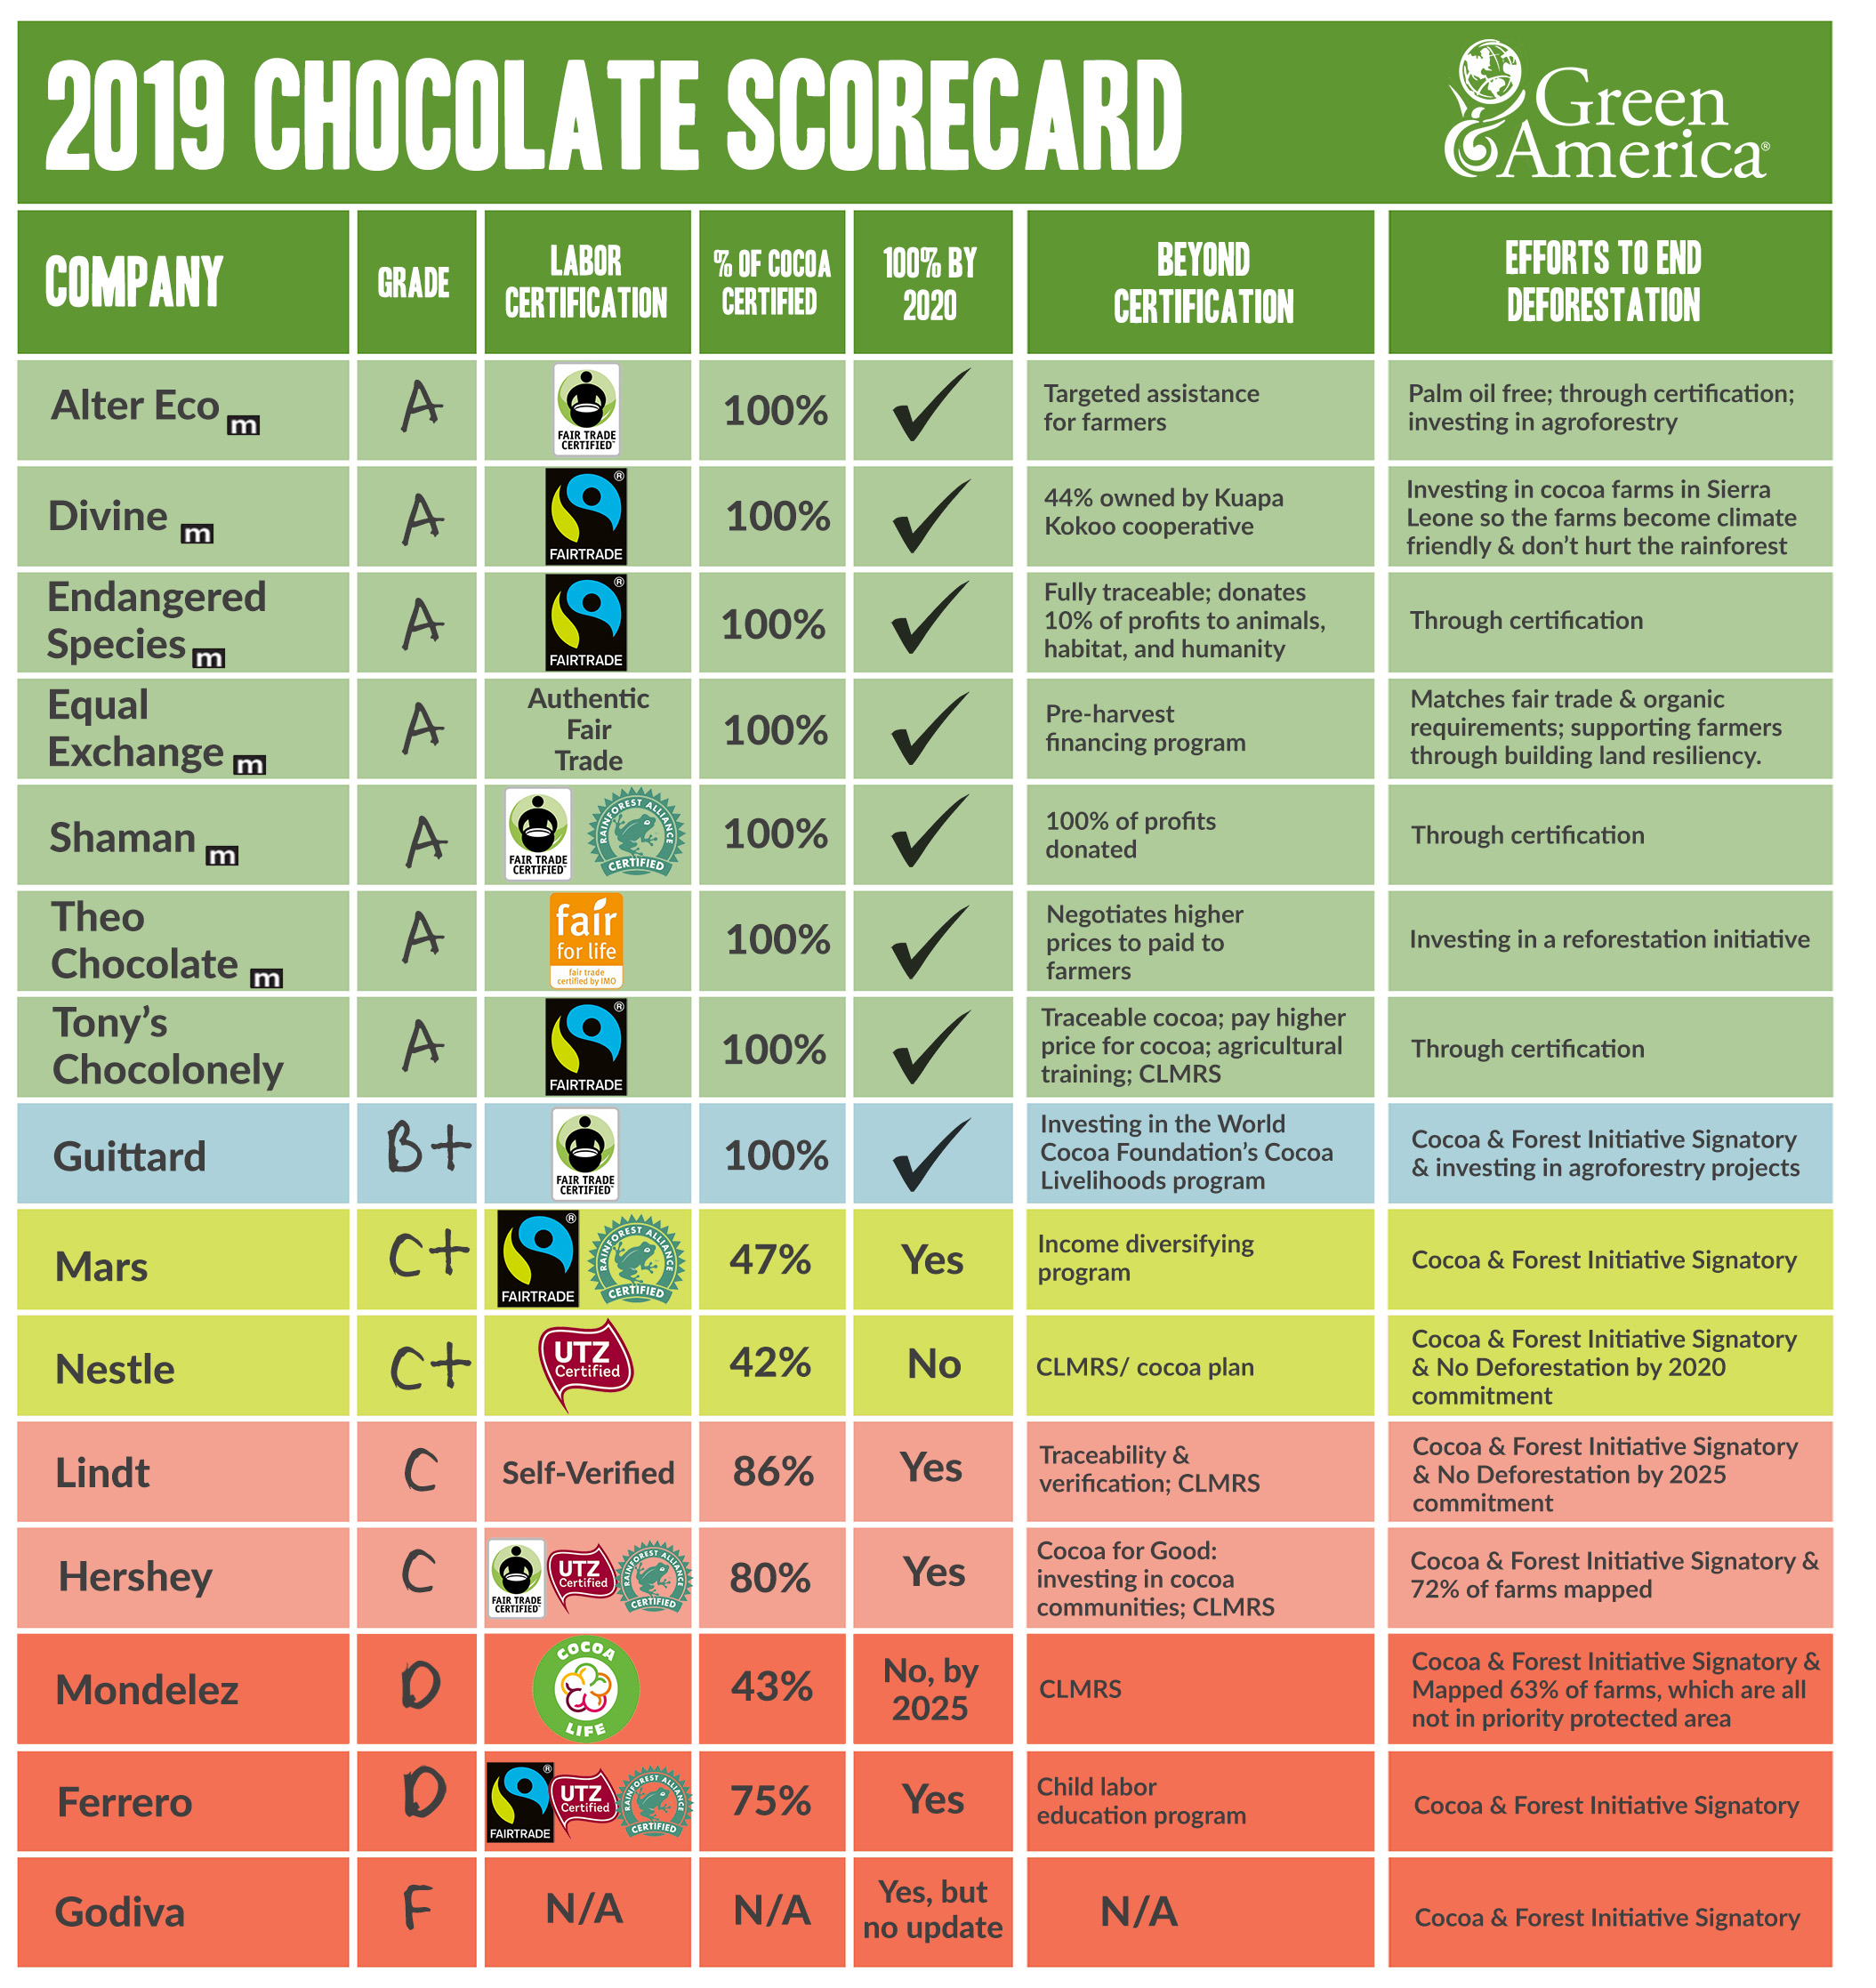 Green America's Chocolate Scorecard